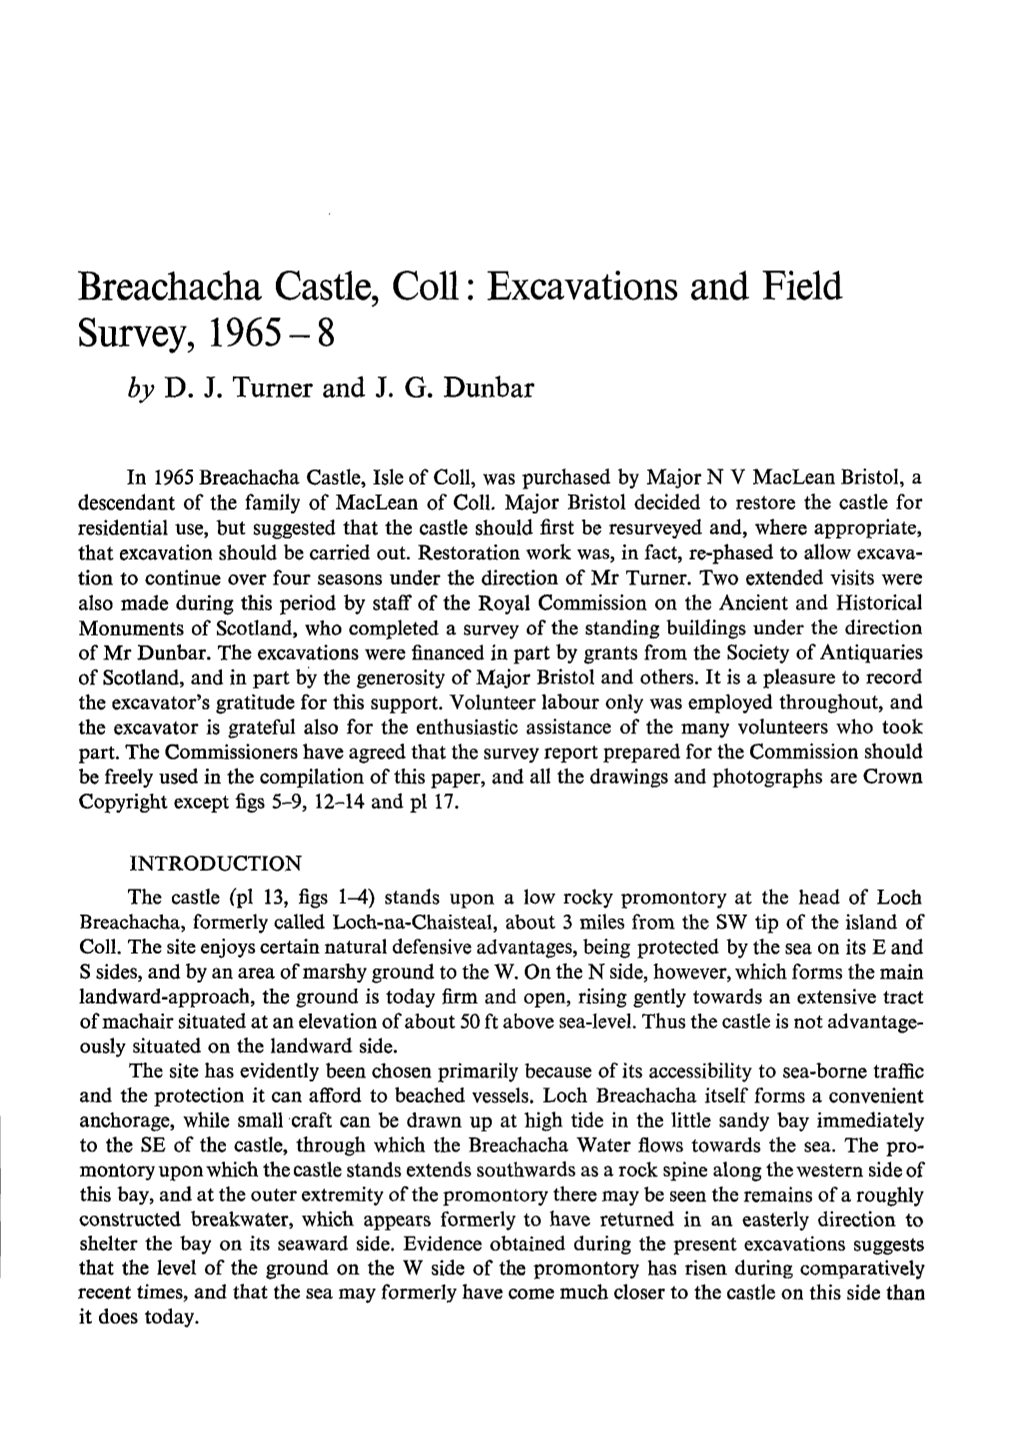 Breachacha Castle, Coll: Excavation Field San D Survey, 1965-8 by D